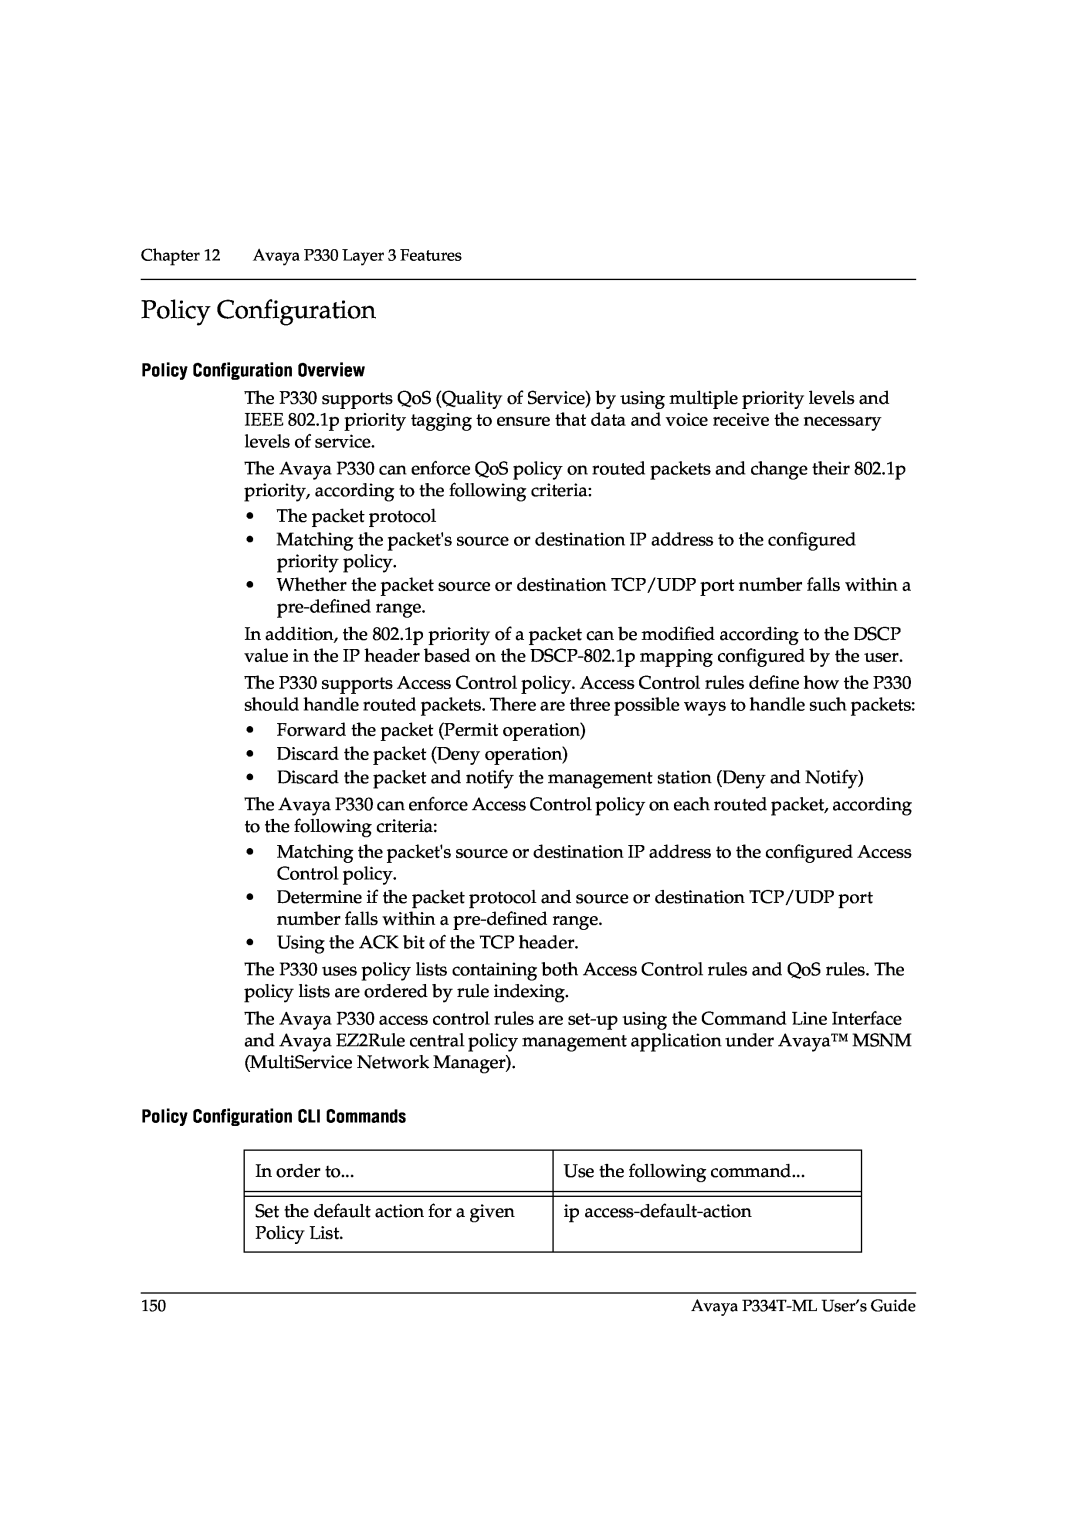 Avaya P3343T-ML manual Policy Configuration Overview, Policy Configuration CLI Commands 